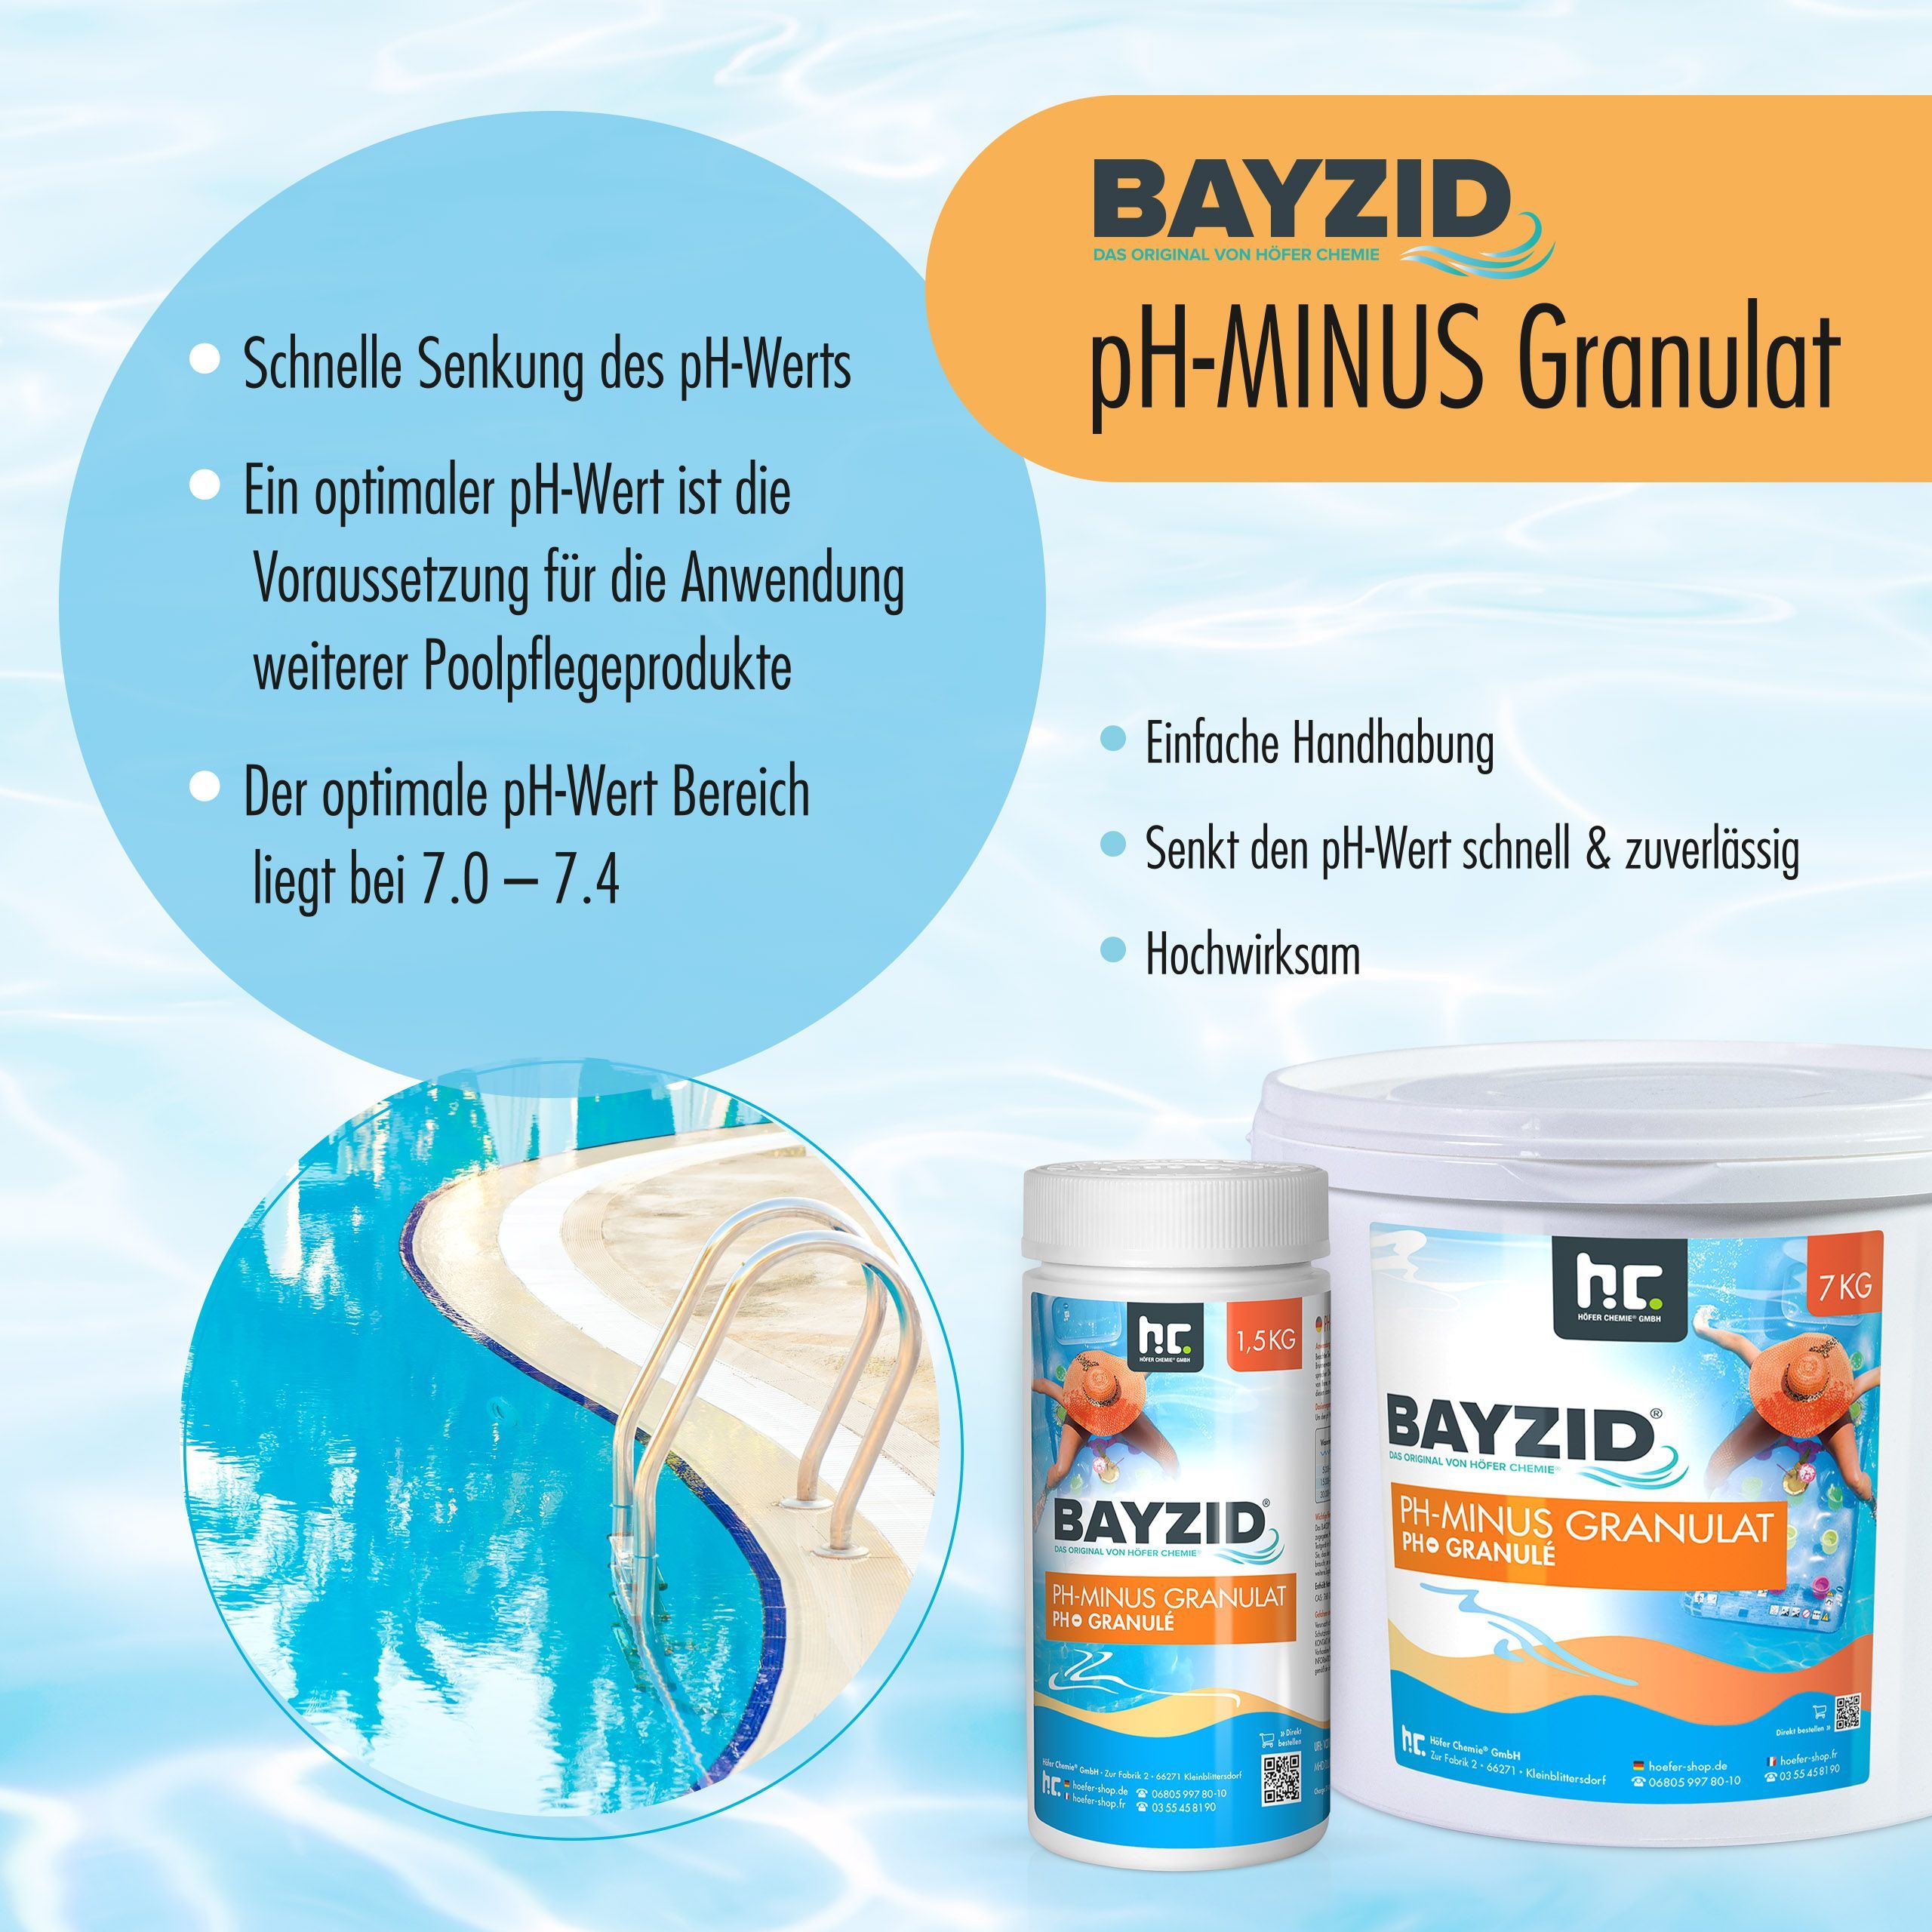 7 kg BAYZID® pH Minus Granulat für den Pool